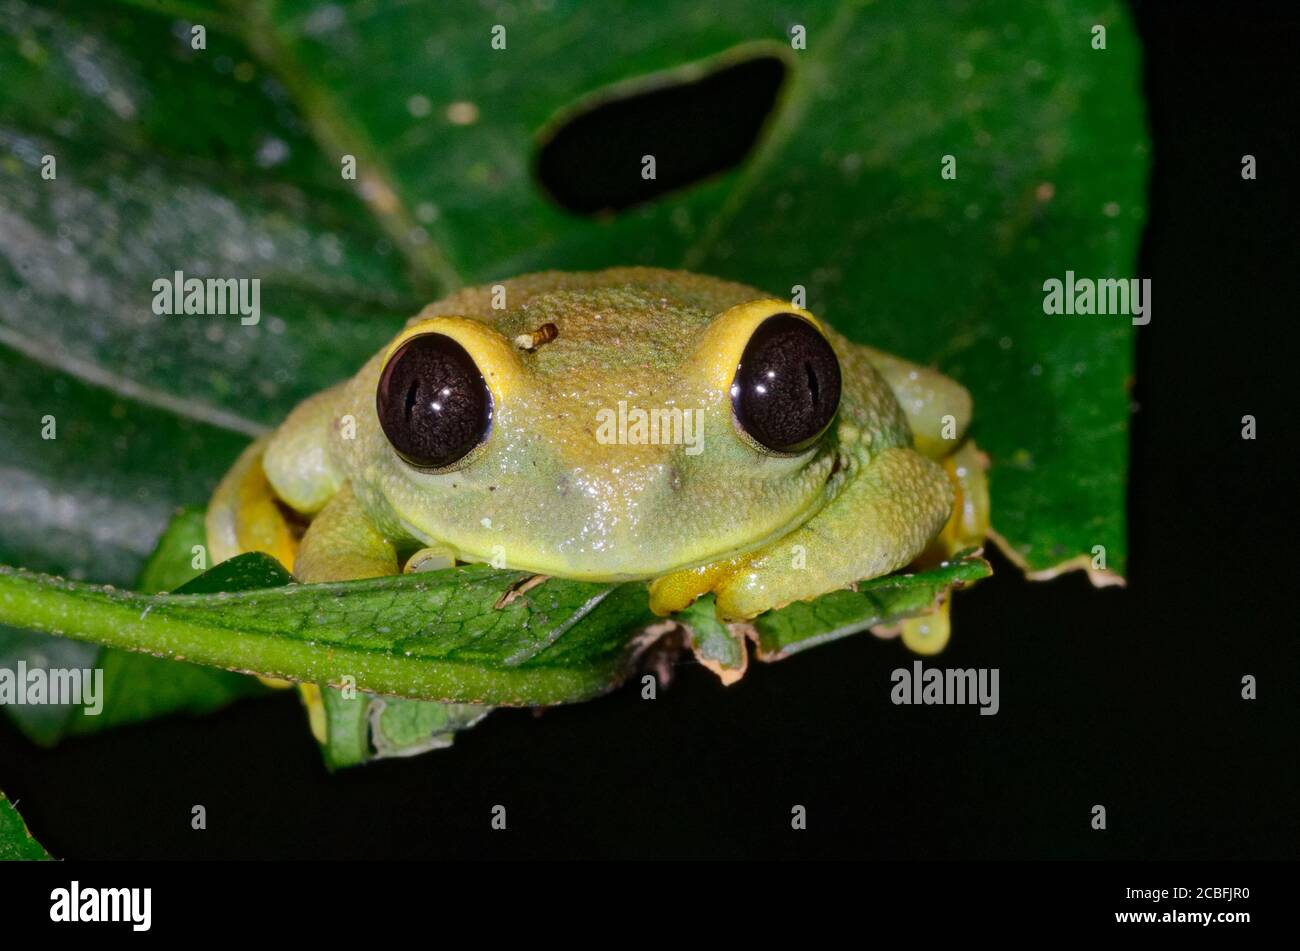 Smiling yellow frog Stock Photo